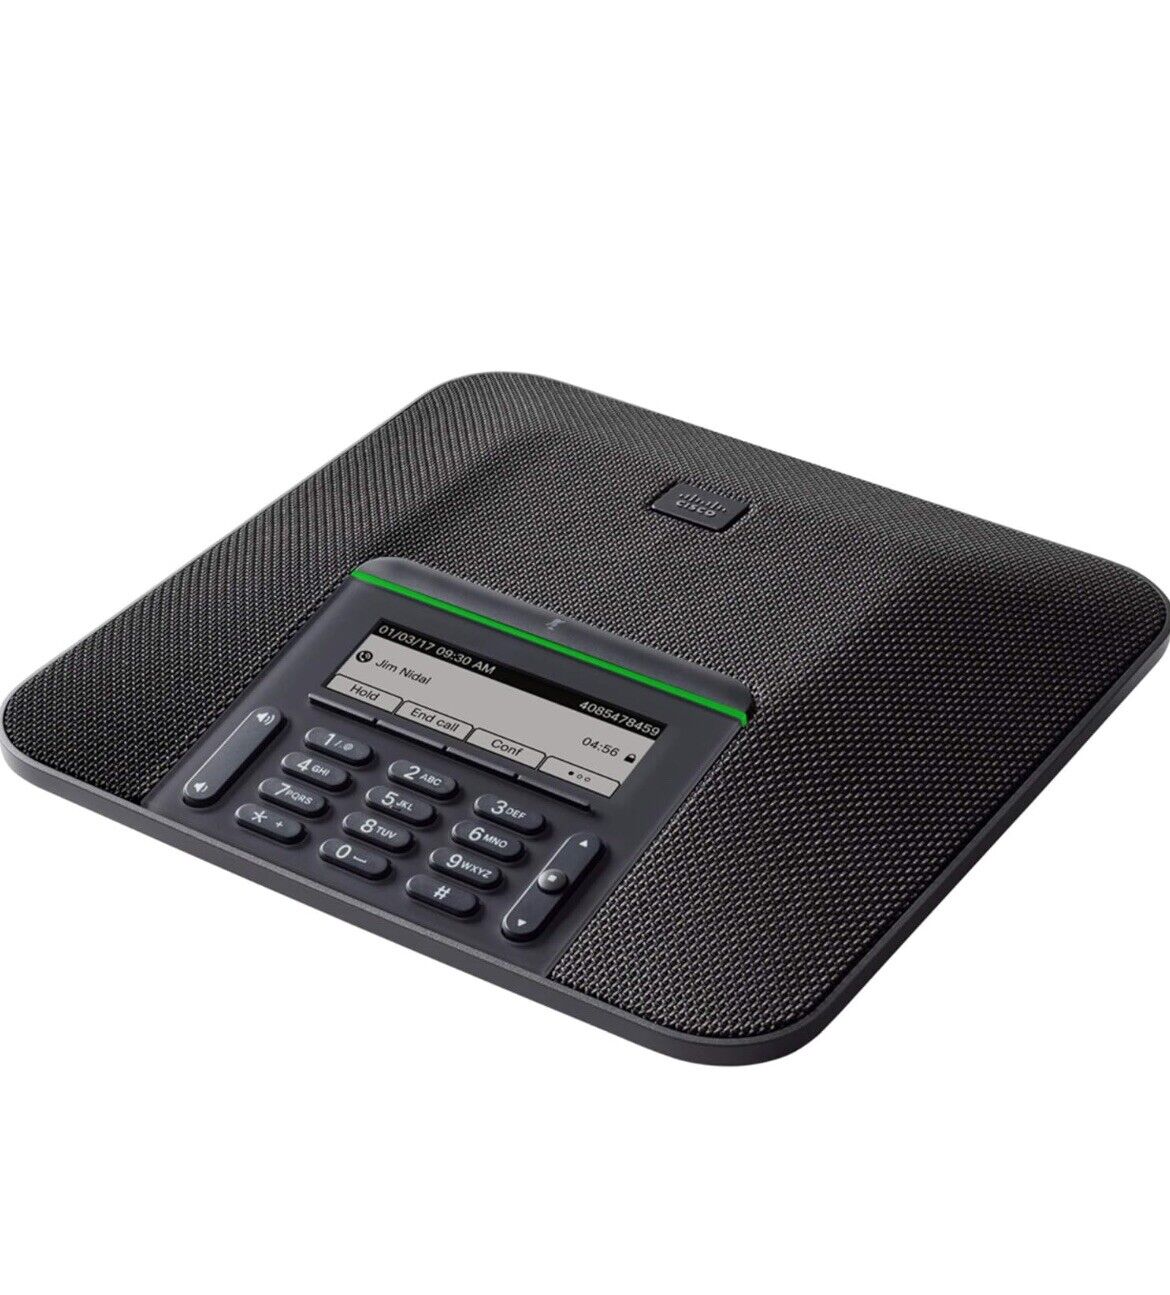 Cisco 7832 IP Conference Phone Station - Black